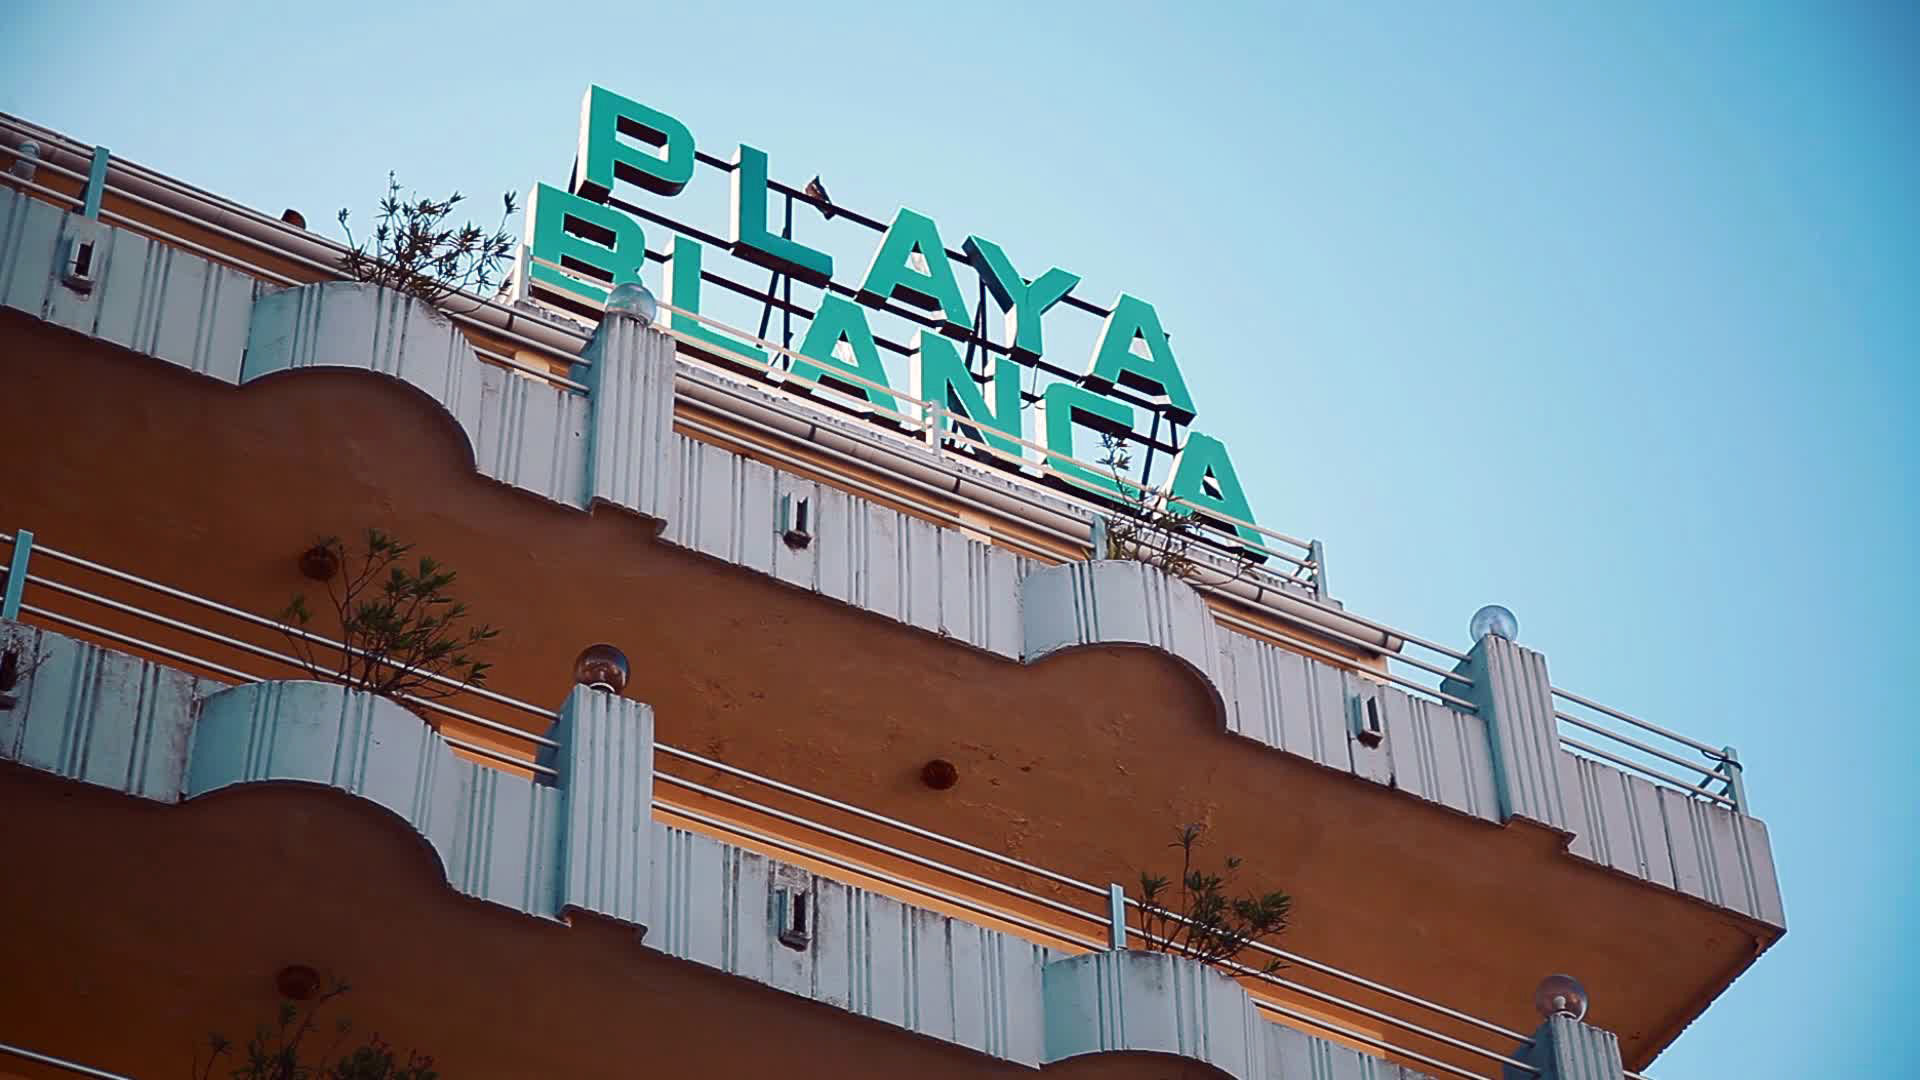 Hotel Playa Blanca Photo